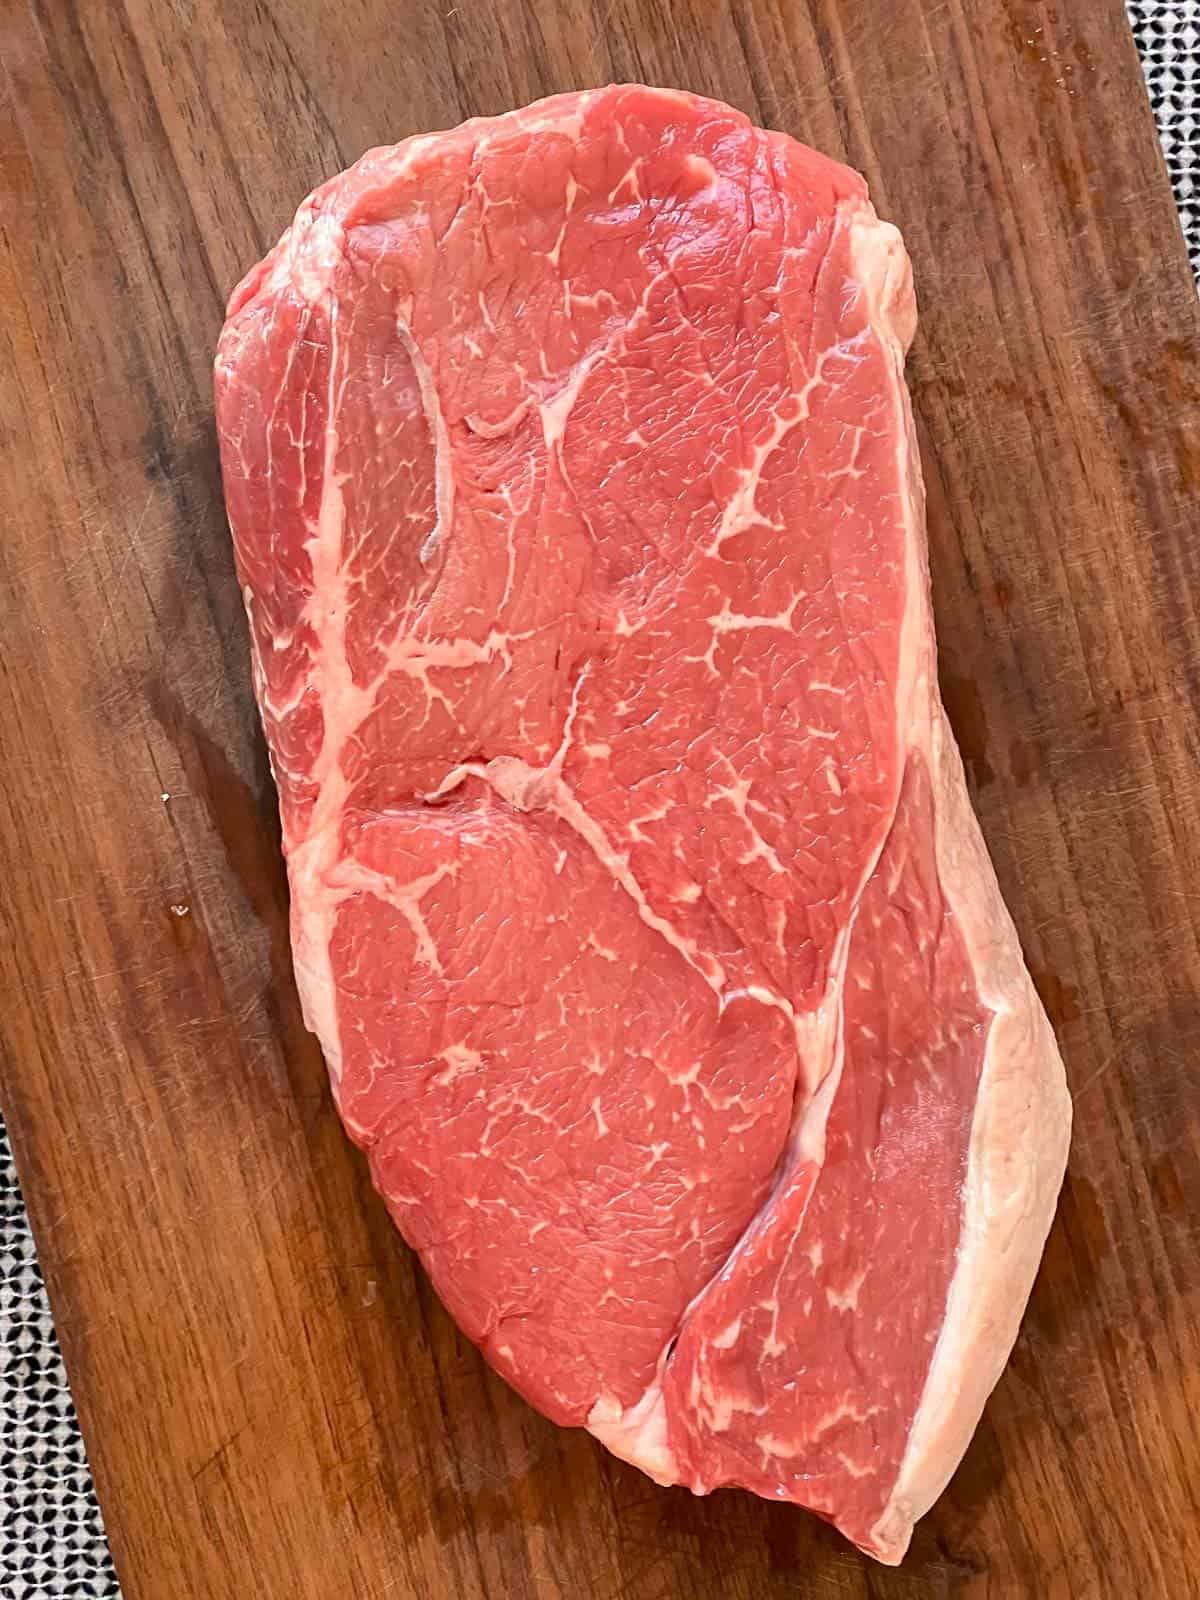 top sirloin steak on a cutting board